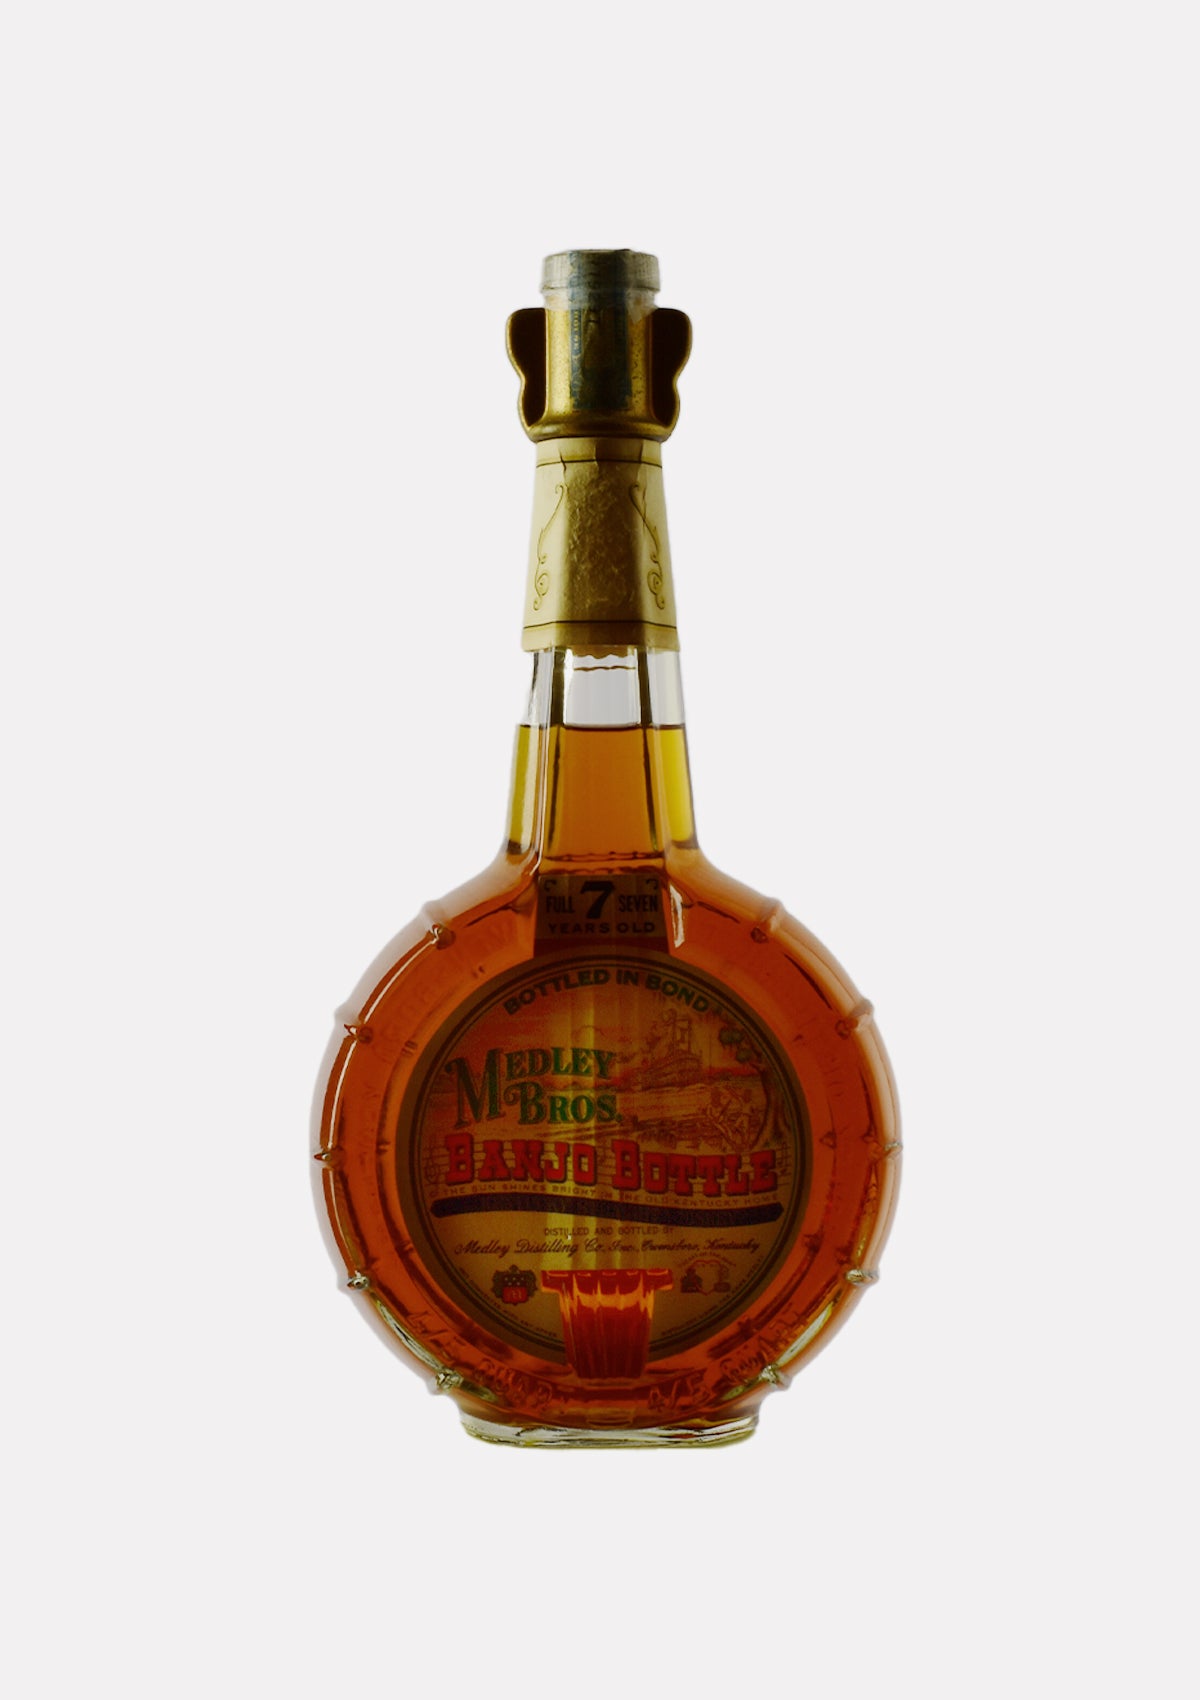 Medley Bros. Banjo Bottle Kentucky Straight Bourbon Whiskey 7 Years